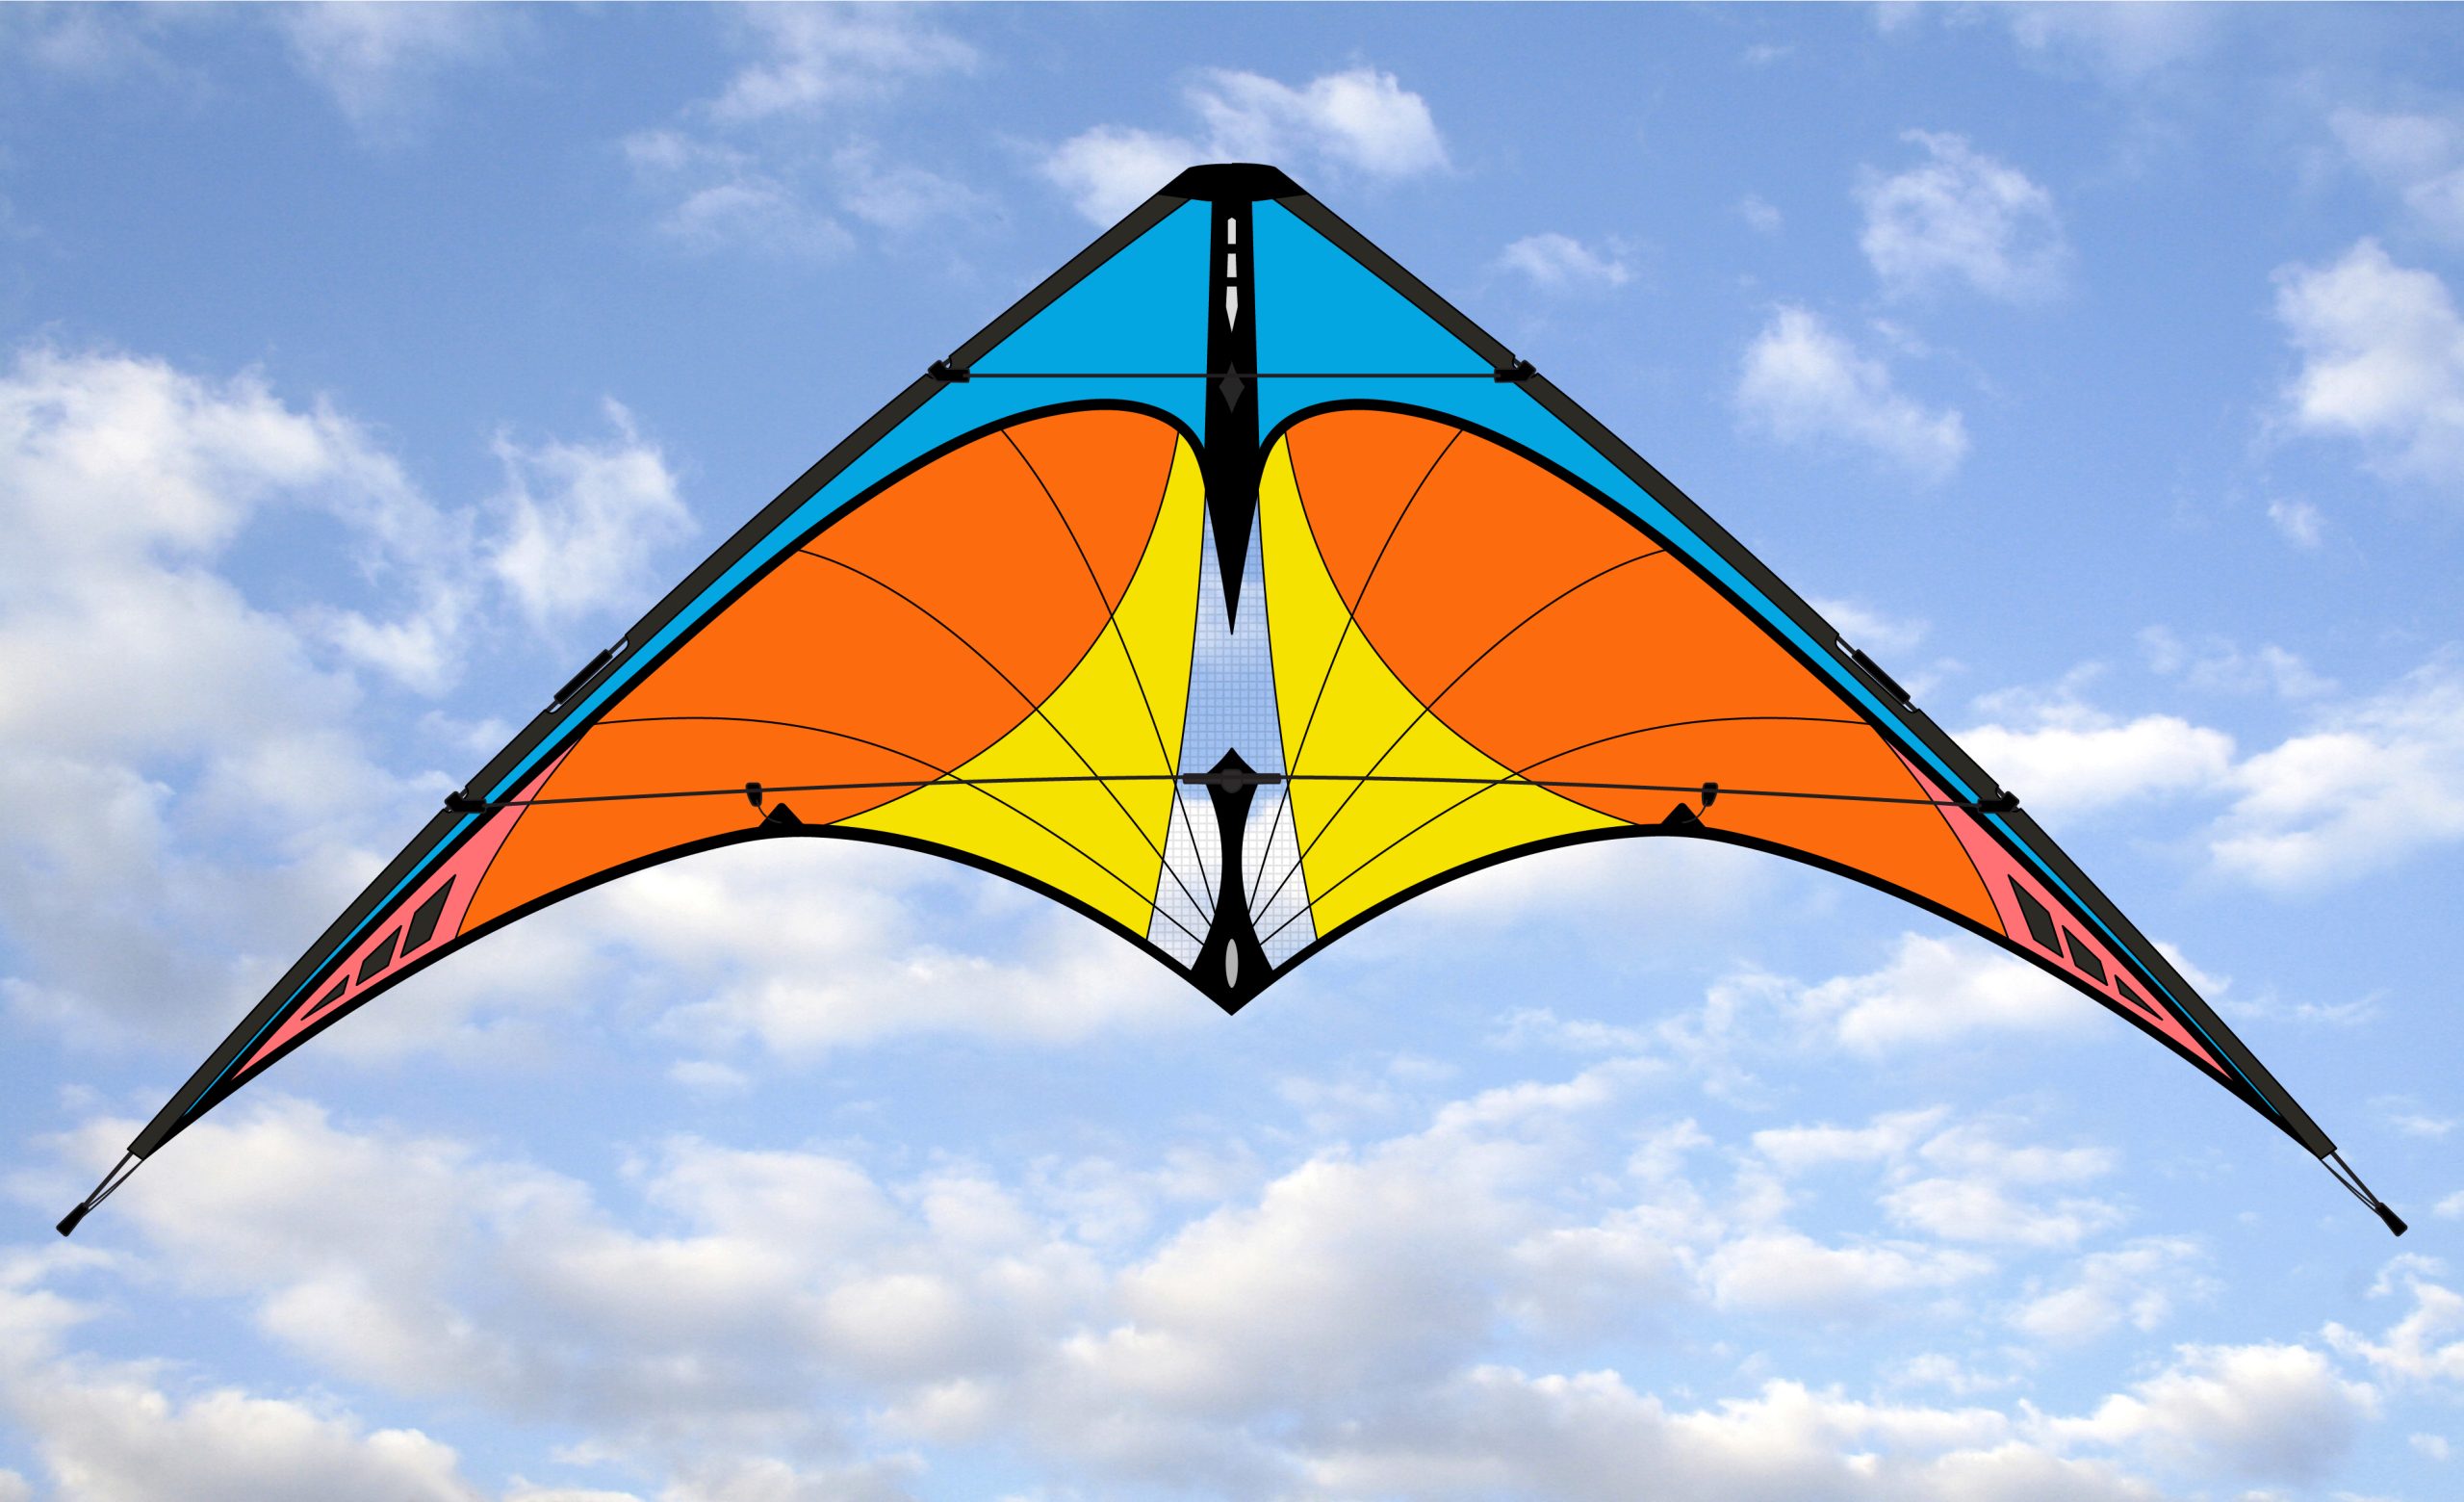 prism-nexus-special-edition-kite